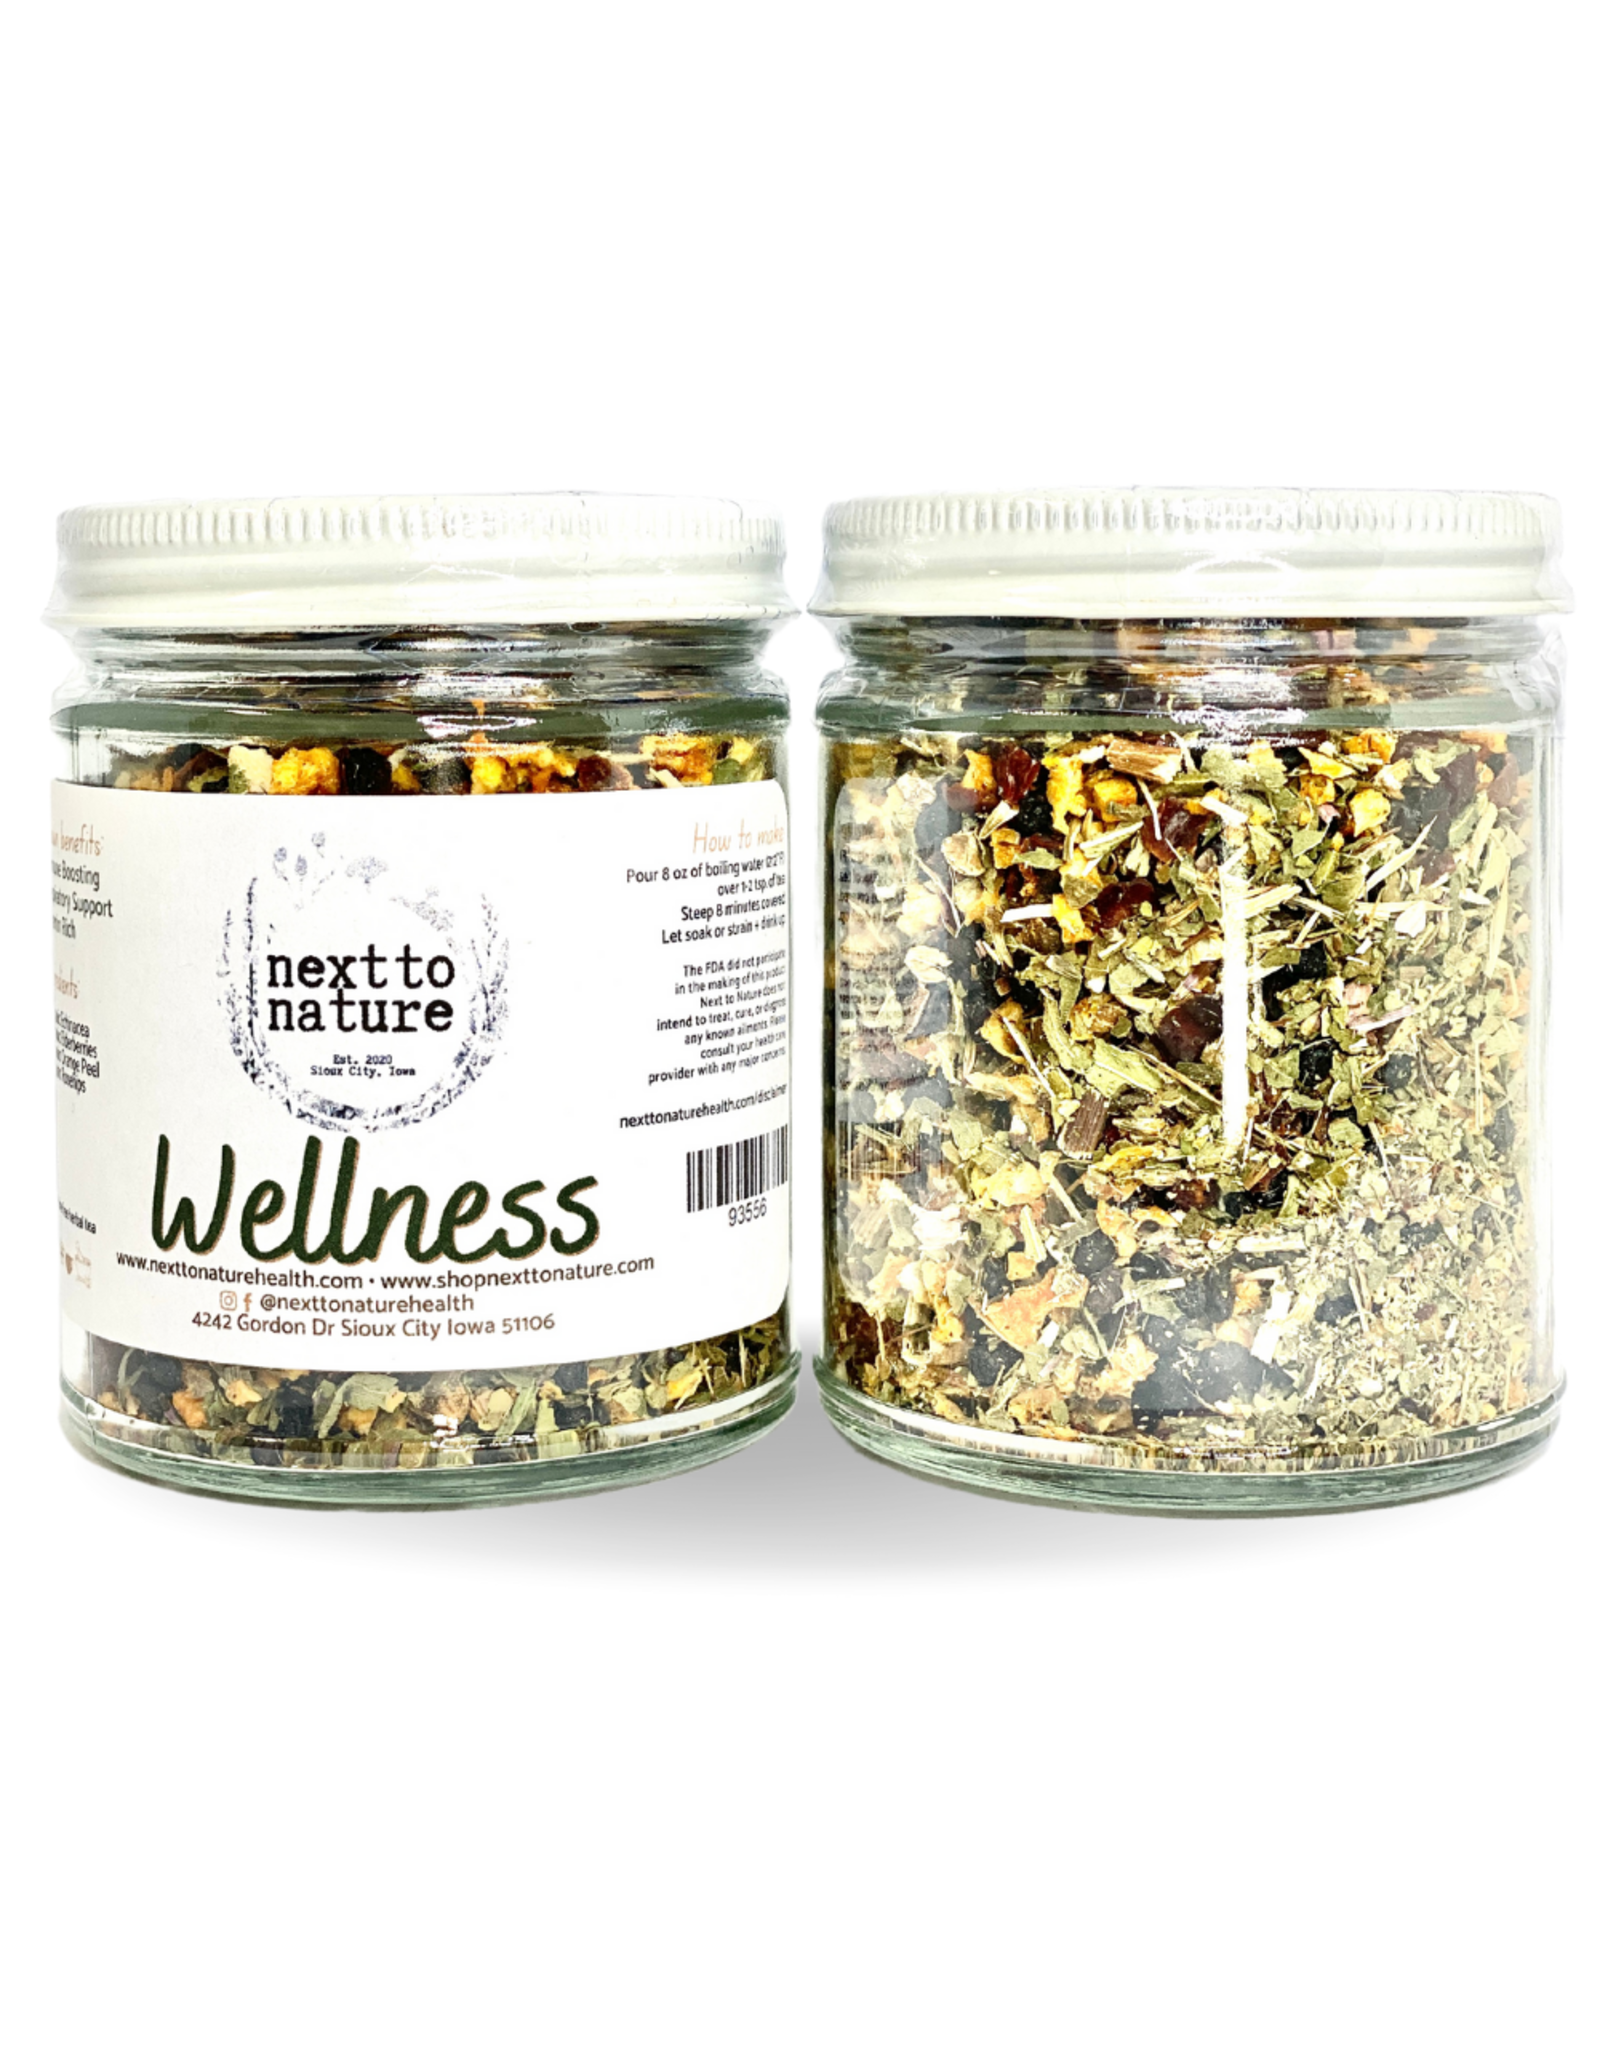 Wellness Herbal Tea